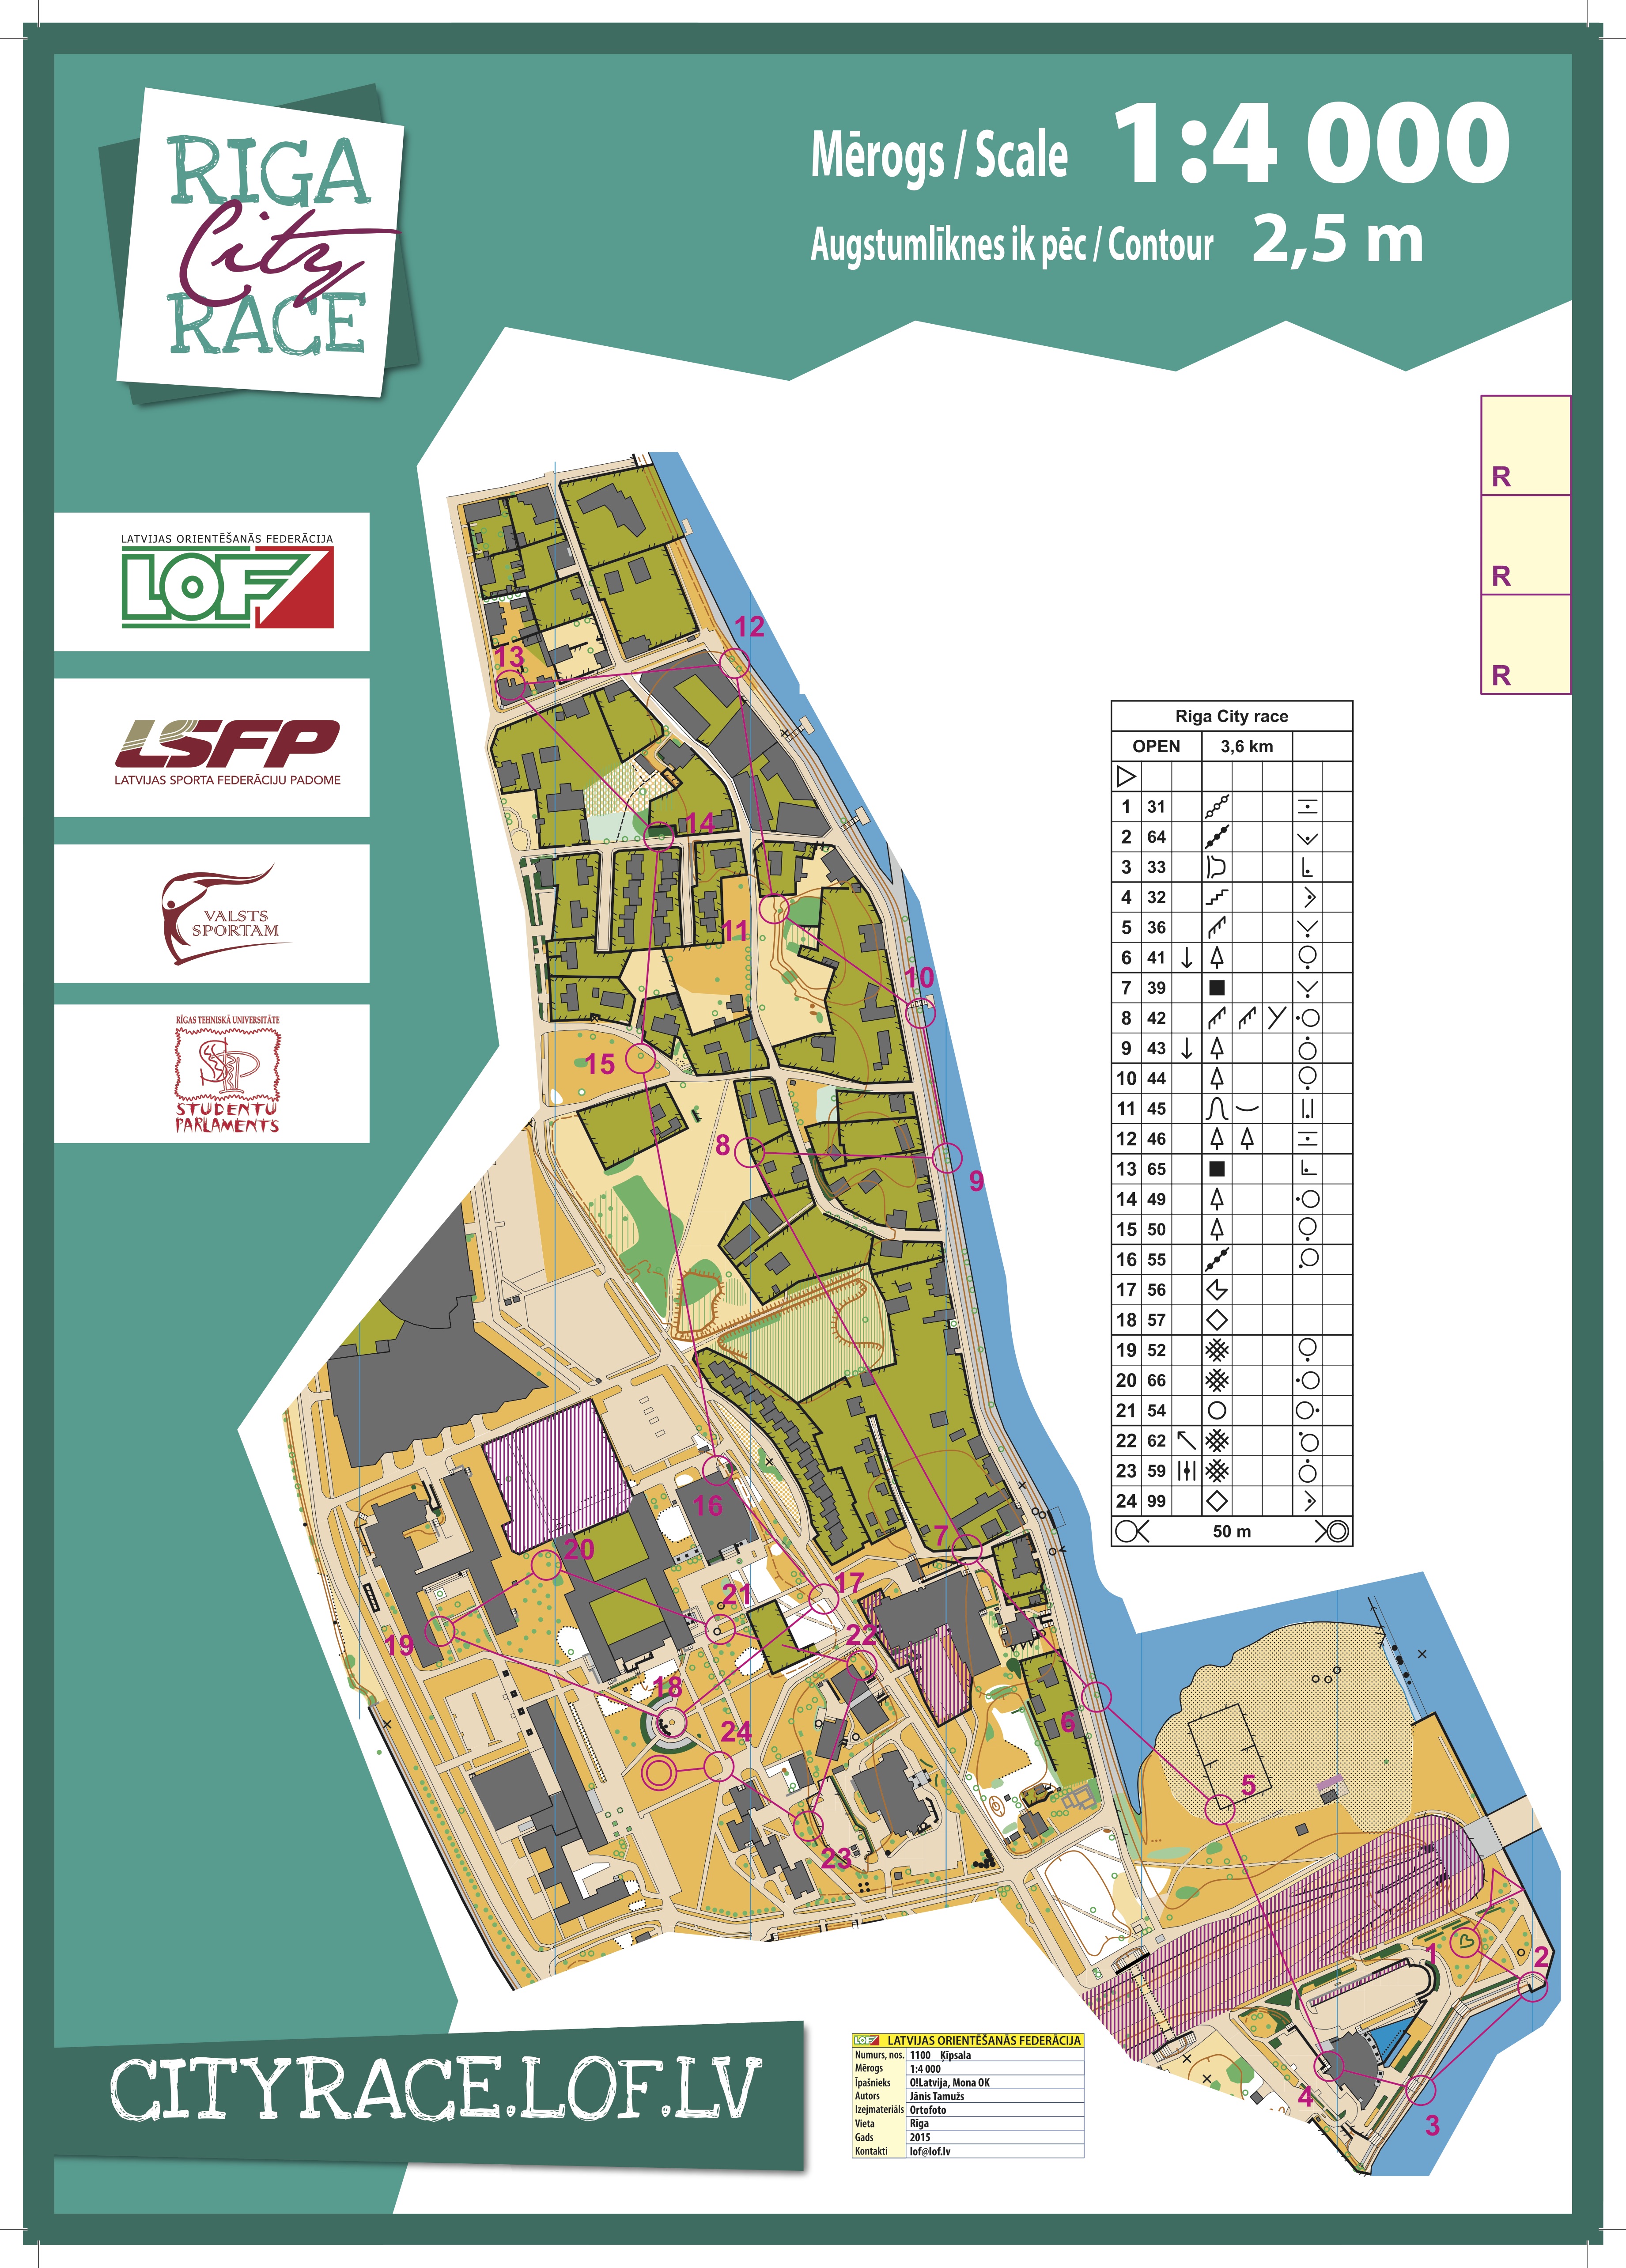 Riga City Race OPEN (28/08/2015)